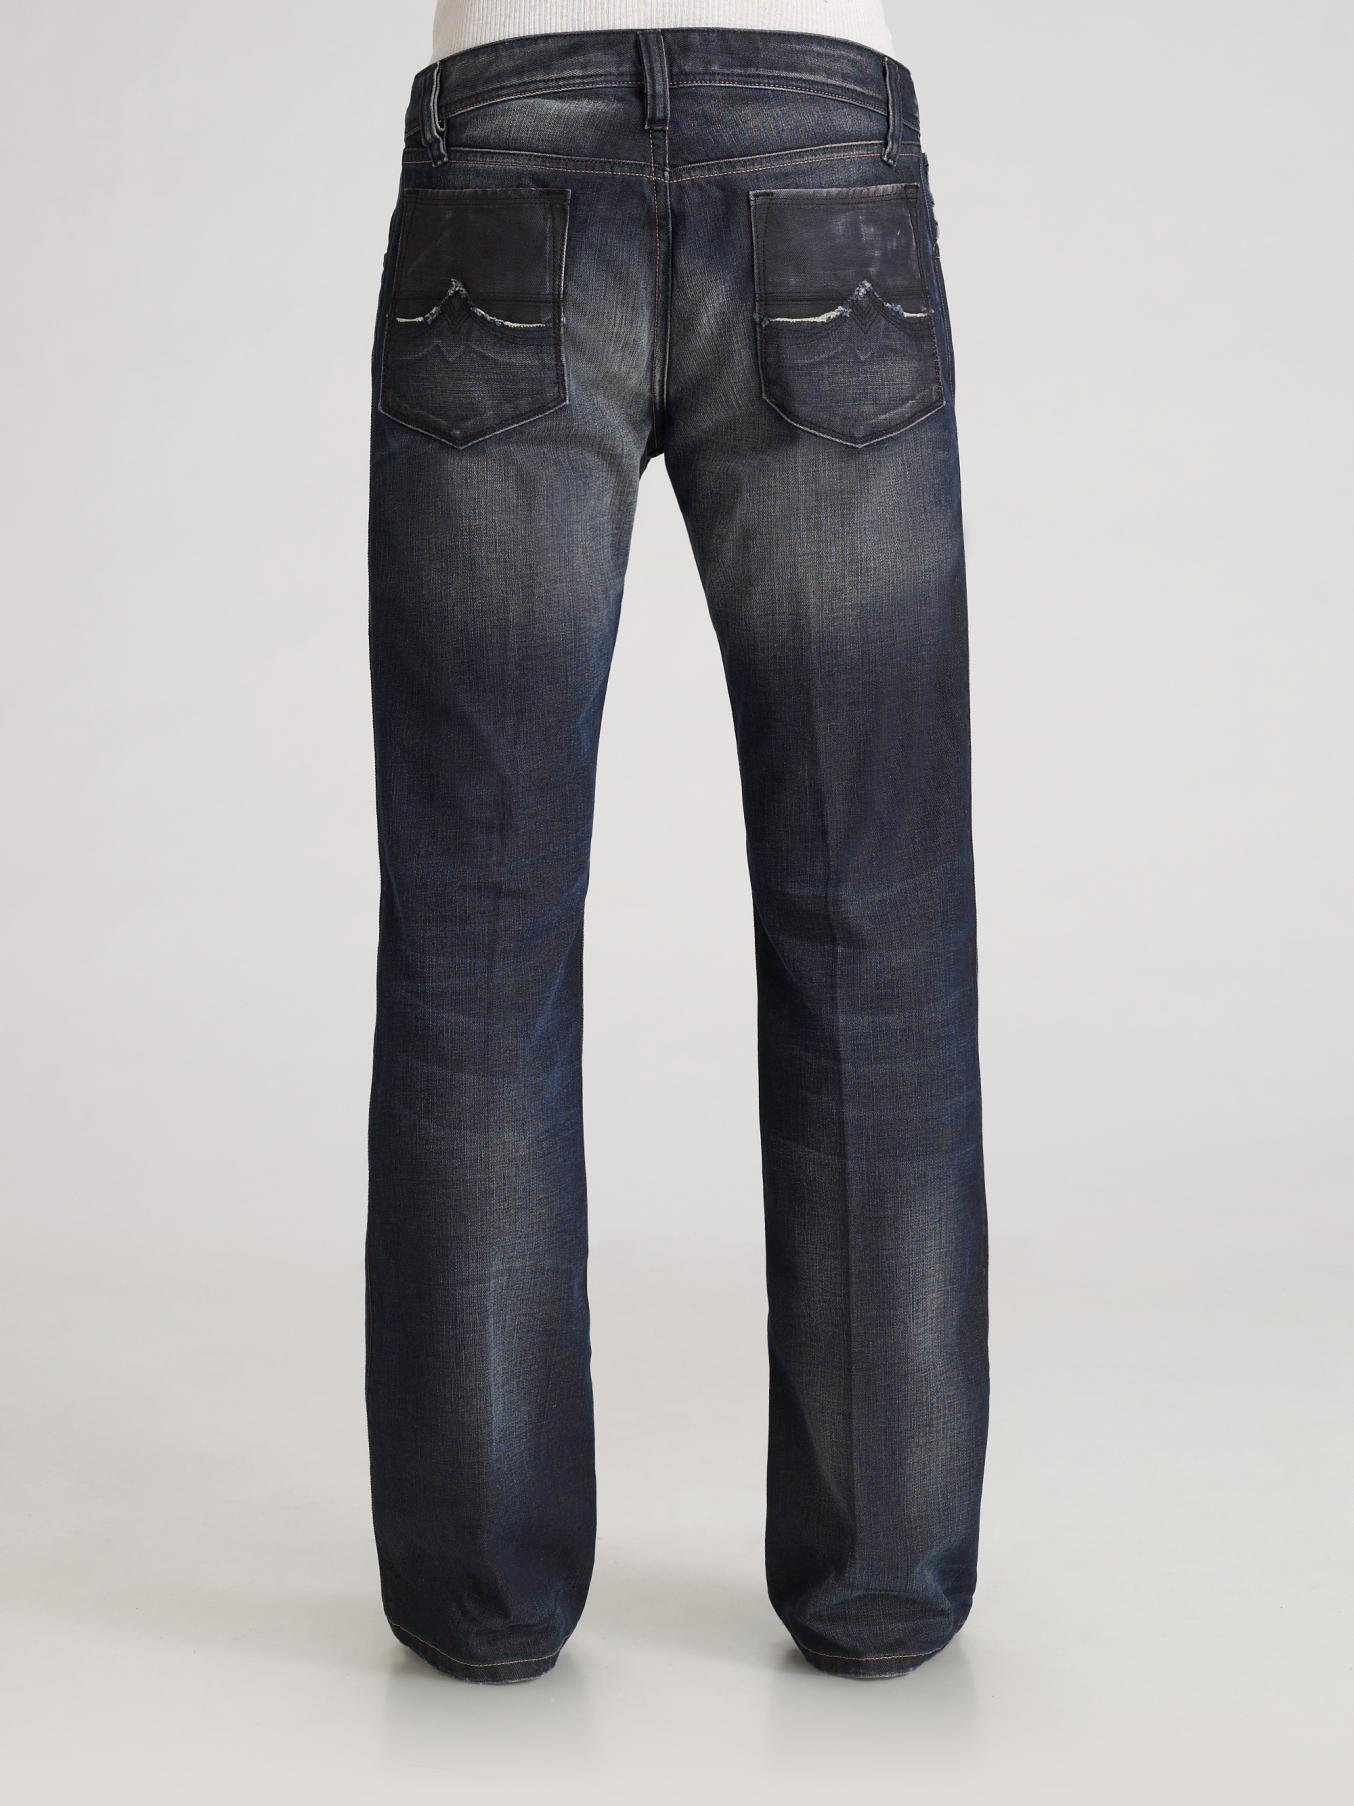 DIESEL Zaf Bootcut Jeans in Denim (Blue) for Men - Lyst